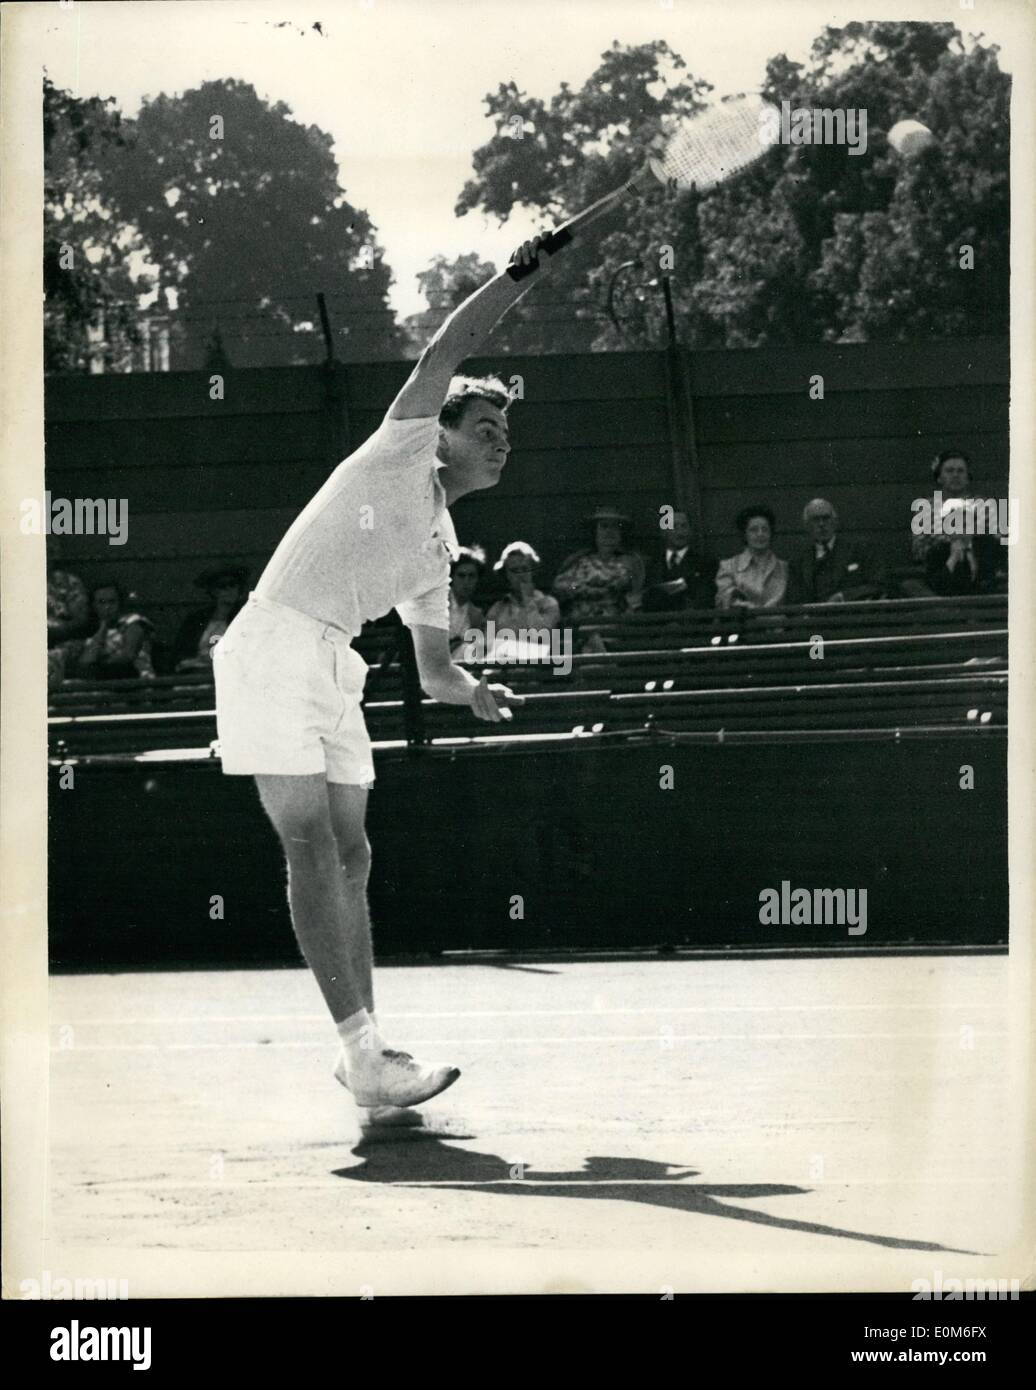 Sett. 09, 1953 - Junior i campionati di tennis di Gran Bretagna. R.K. Wilson nel gioco. Ã¢â'¬â€oe Keystone foto mostra: - R.K. Wilson Foto Stock